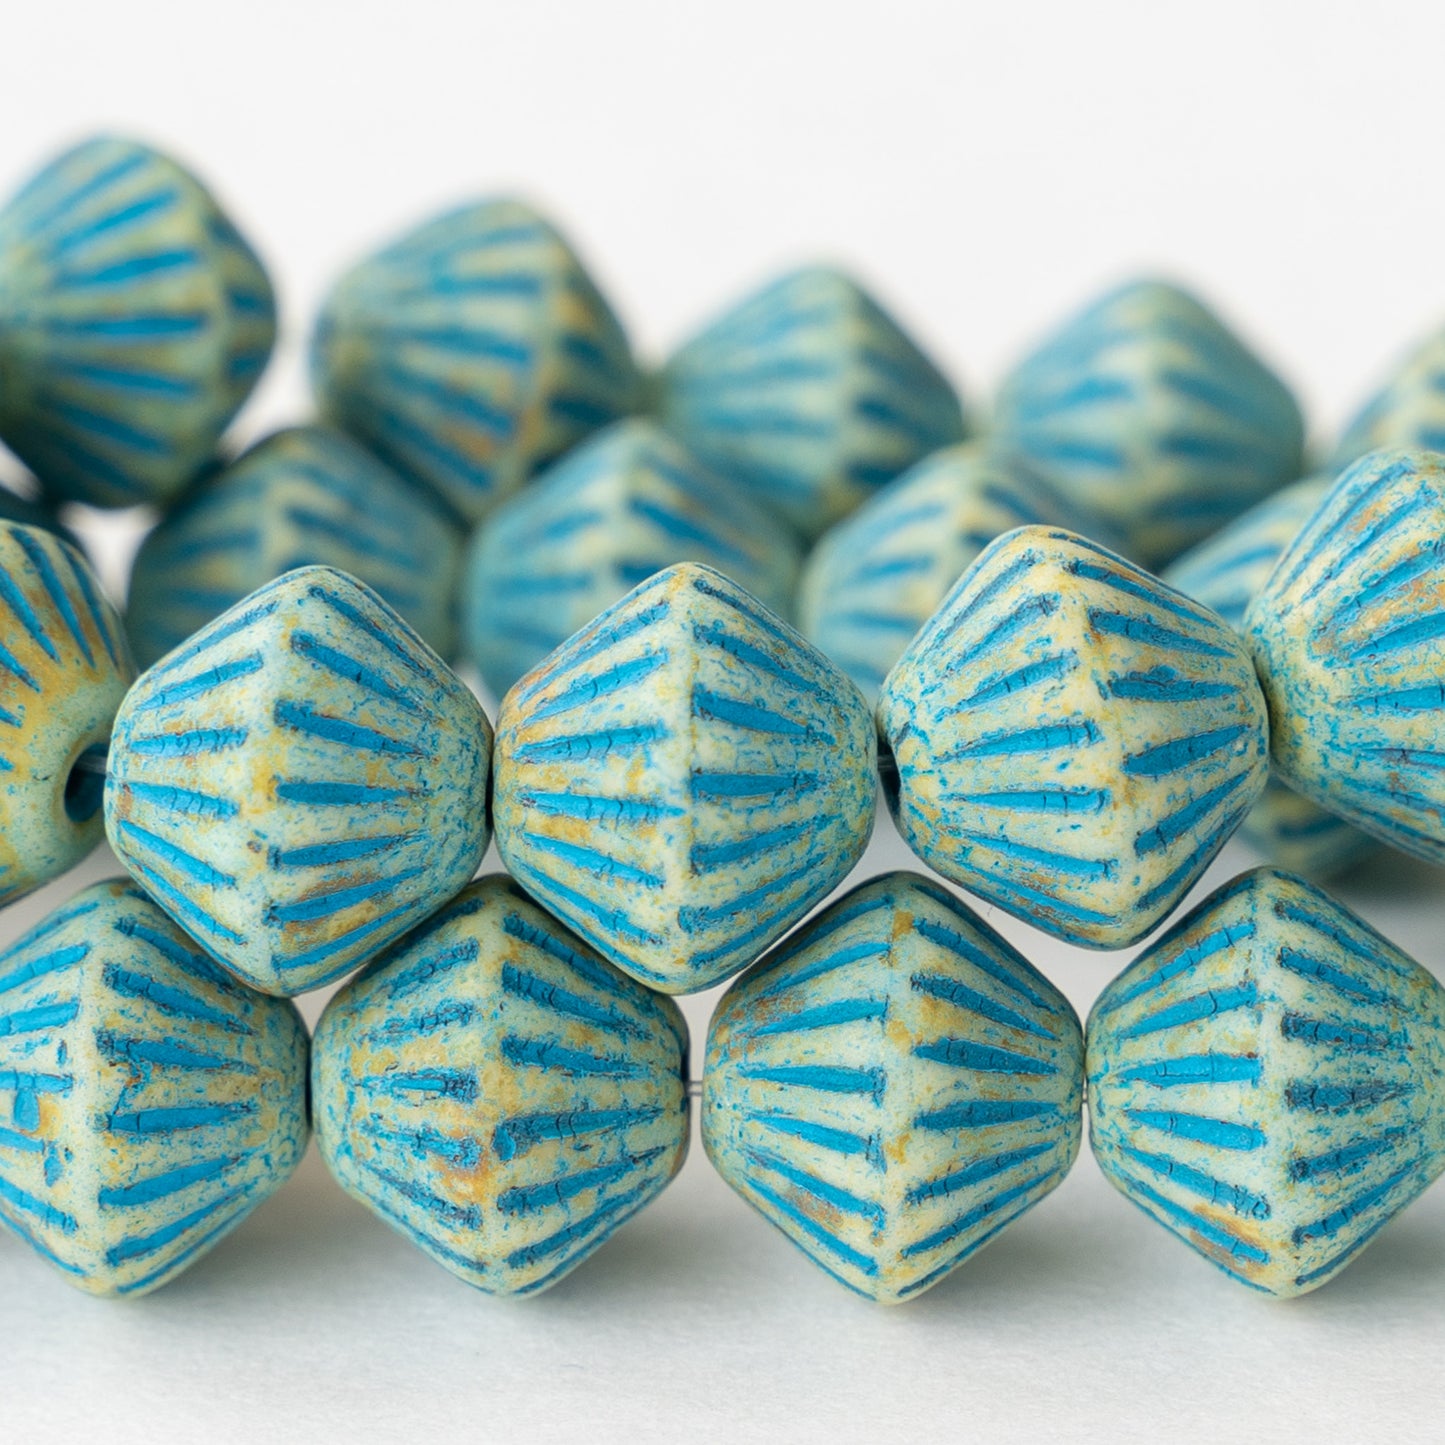 10x11mm Glass Bi-cone - Ivory with Aqua Wash - 15 beads